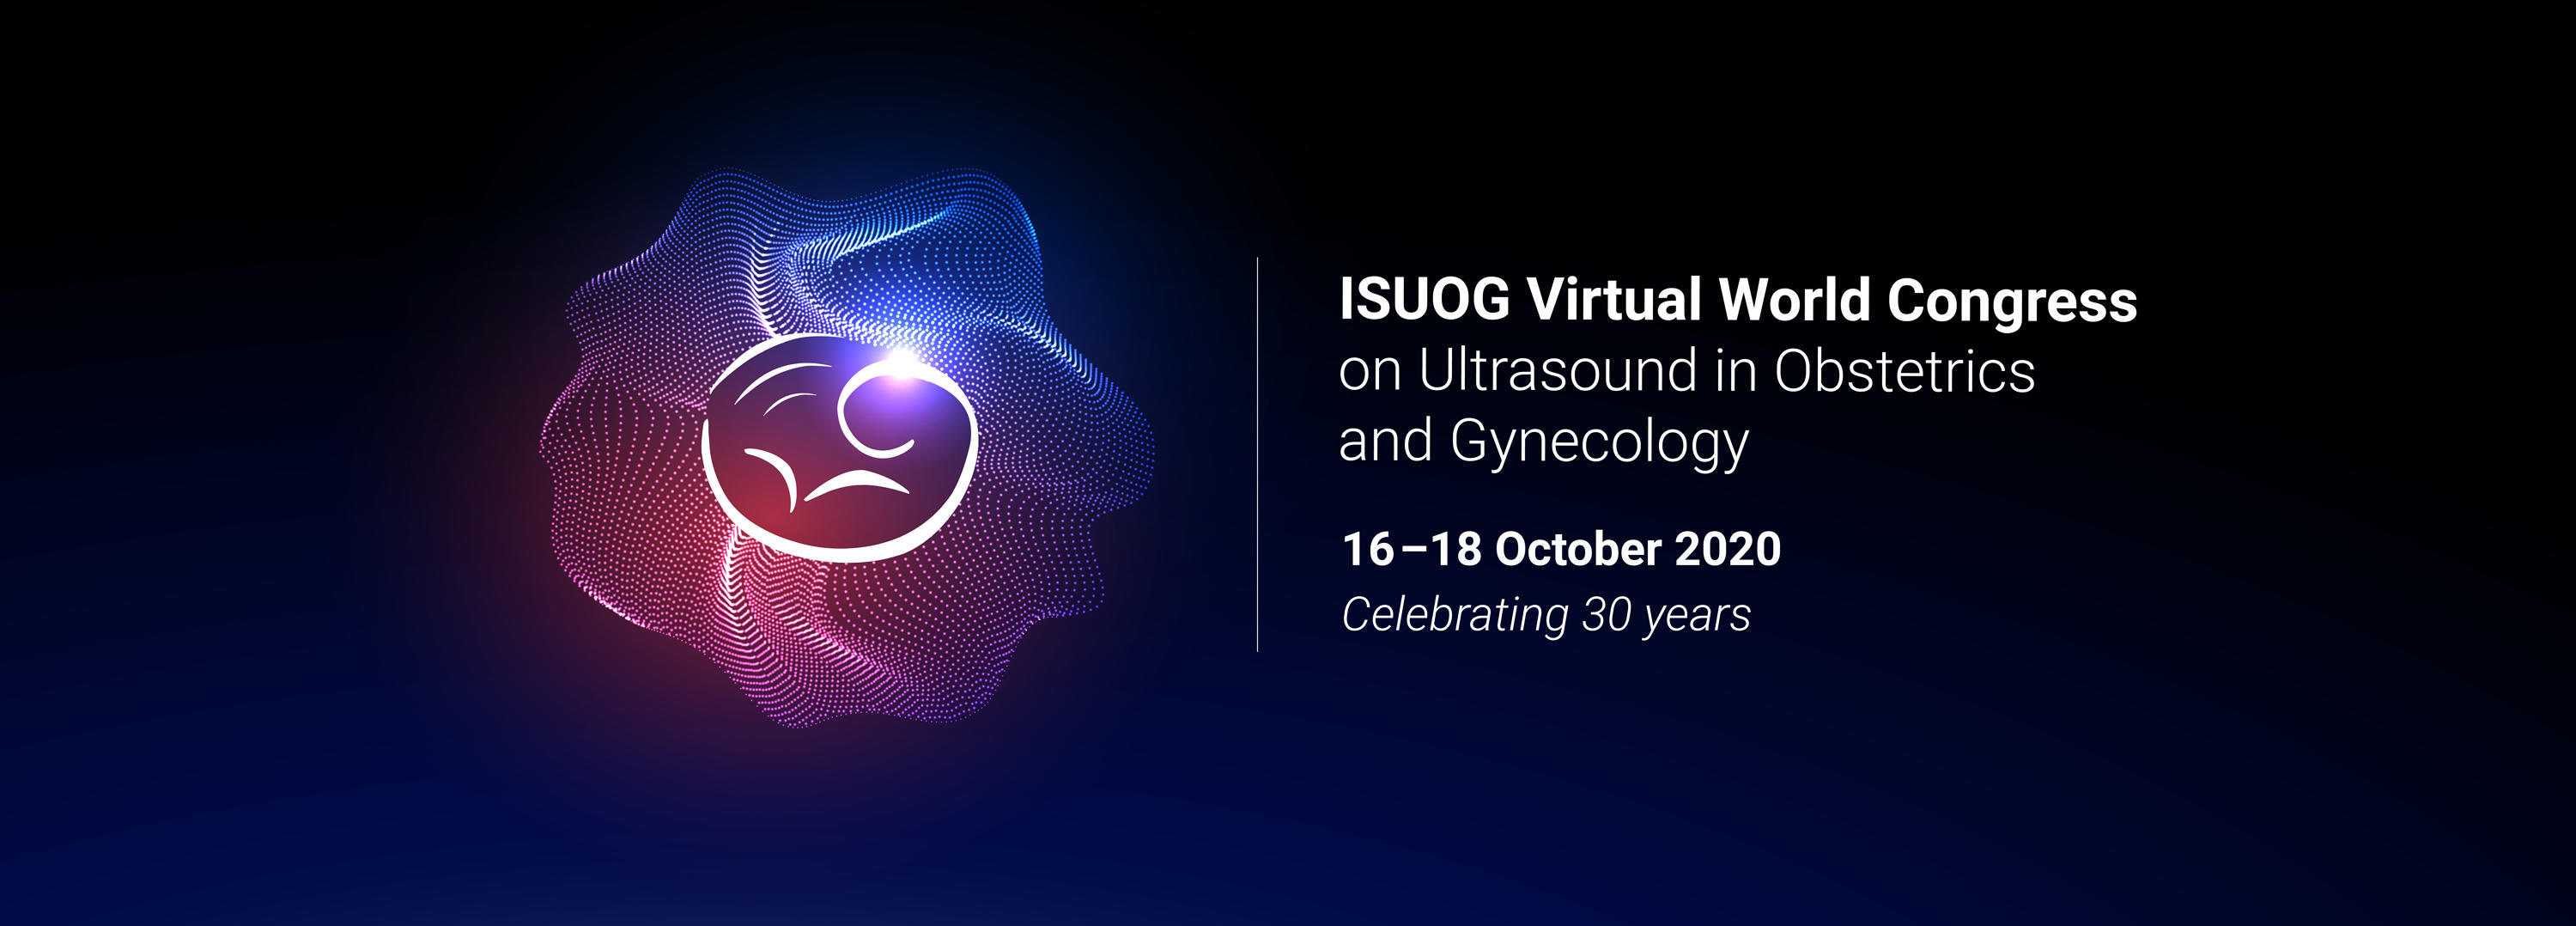 ISUOG Virtual World Congress on Ultrasound in Obstetrics & Gynecology